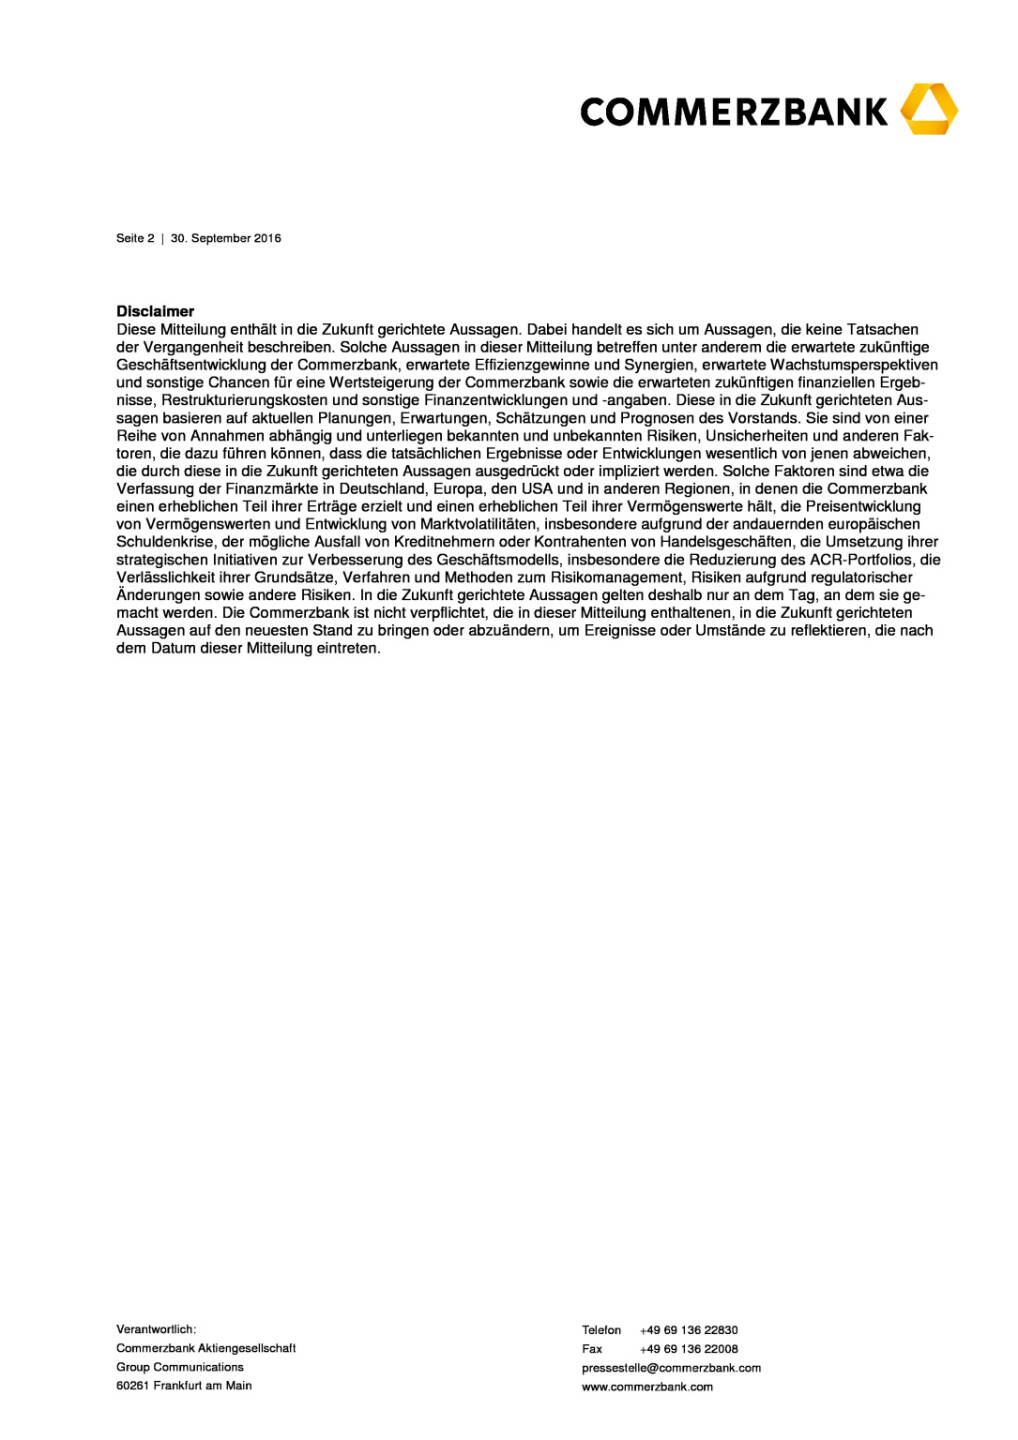 Commerzbank-Hochhaus an Samsung SRA Asset Management verkauft, Seite 2/2, komplettes Dokument unter http://boerse-social.com/static/uploads/file_1867_commerzbank-hochhaus_an_samsung_sra_asset_management_verkauft.pdf